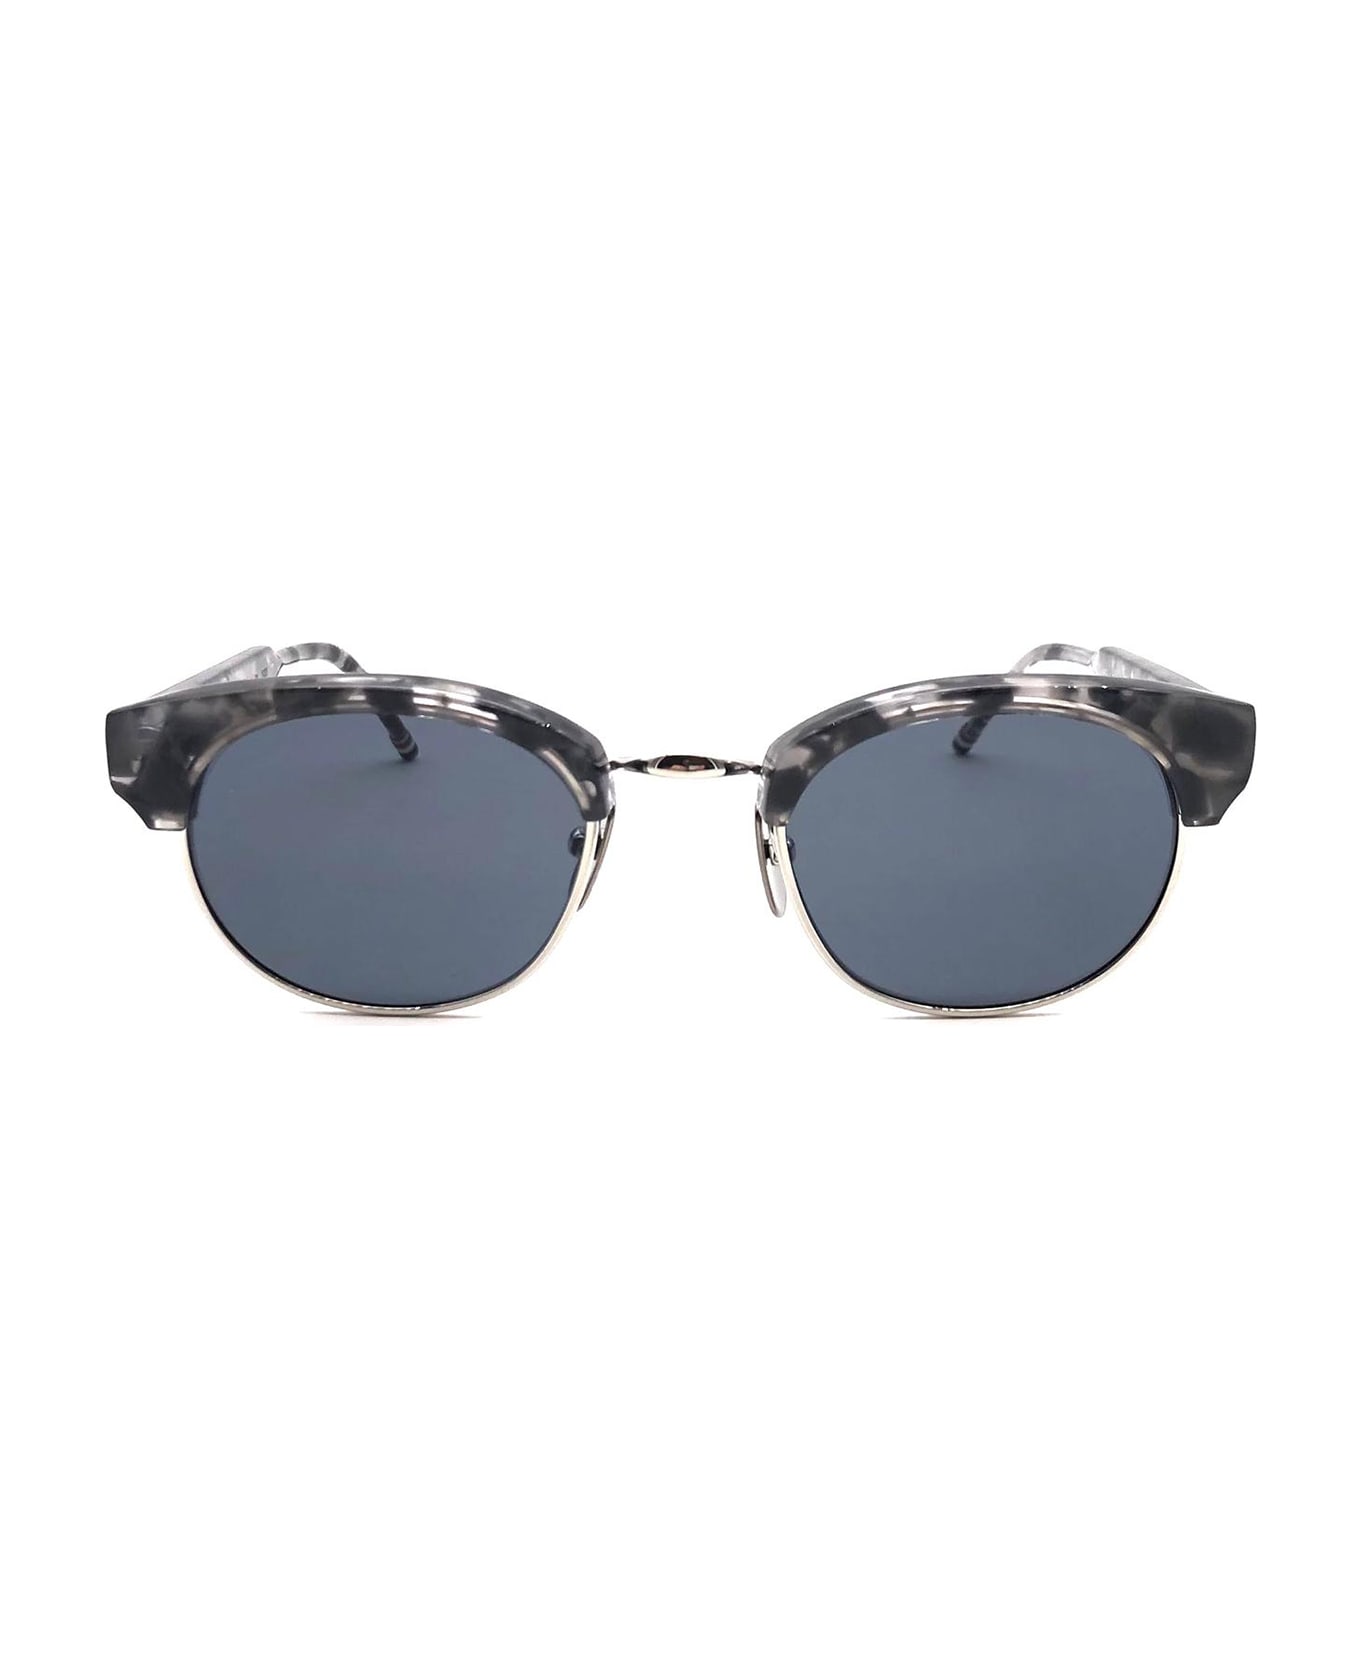 Thom Browne UES702A/G0003 Sunglasses - Dark Grey